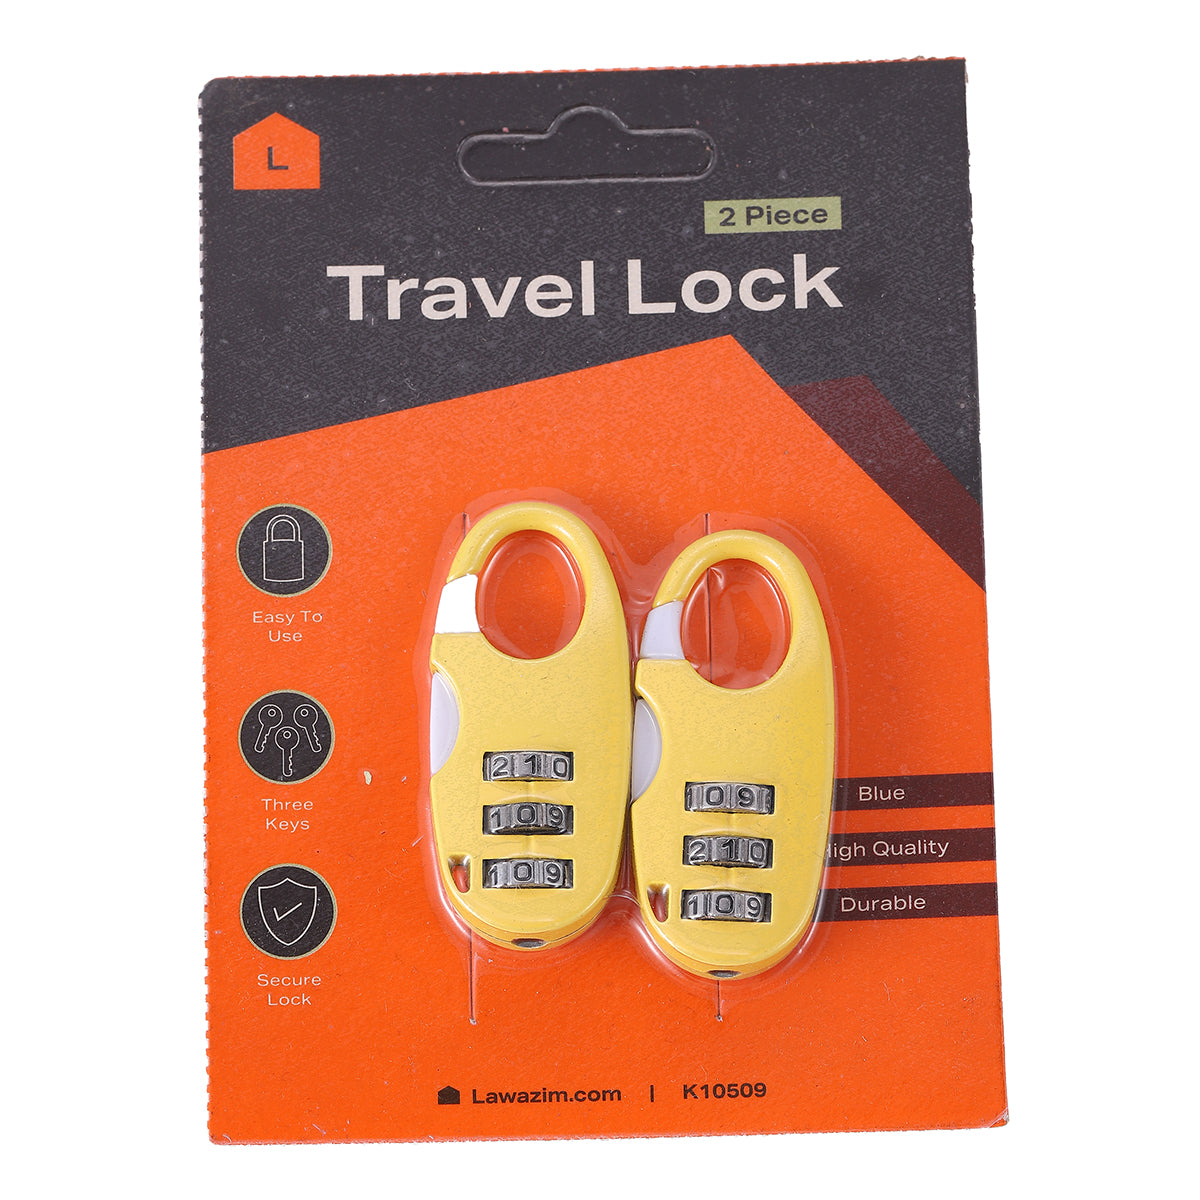 2-Piece Travel Lock - Yellow